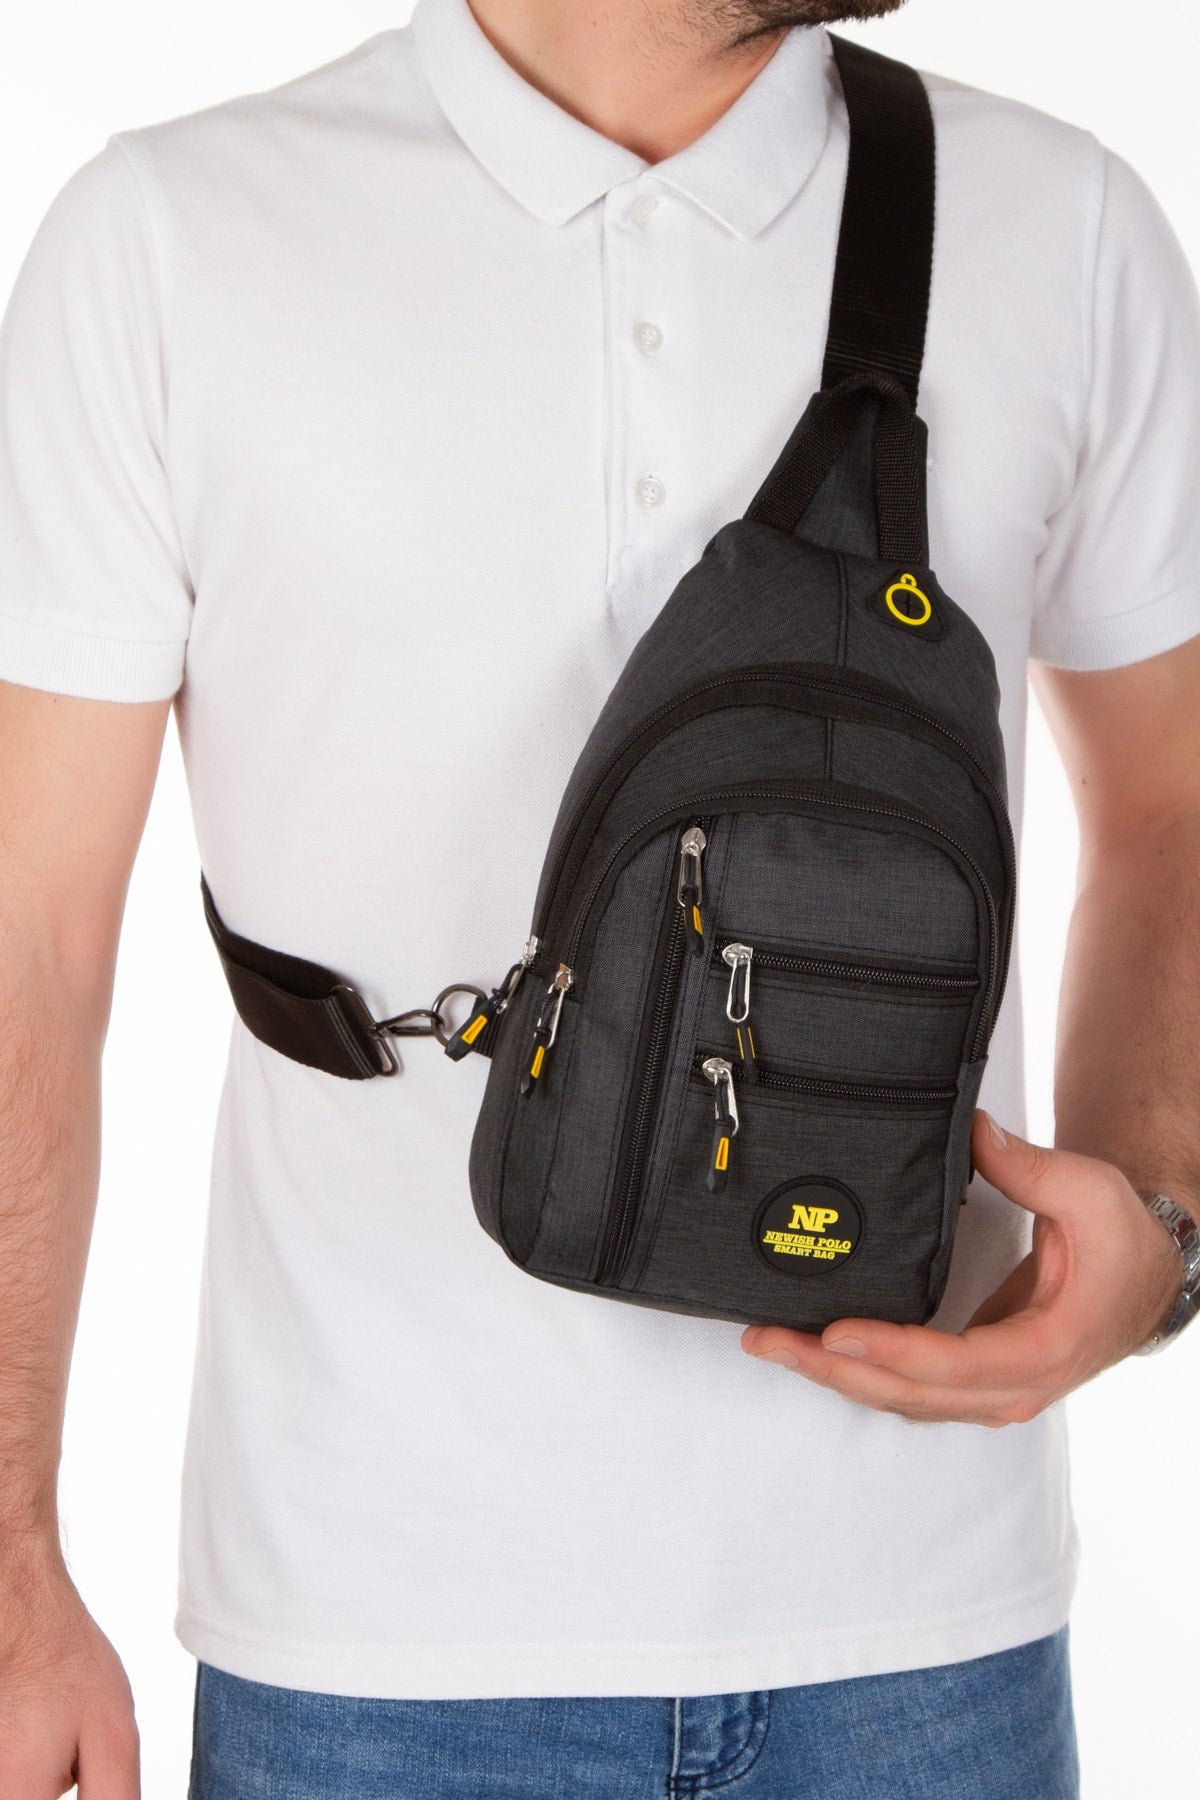 Unisex Black Waterproof Usb Headphone Out Shoulder Bag Crossbody Chest Bag